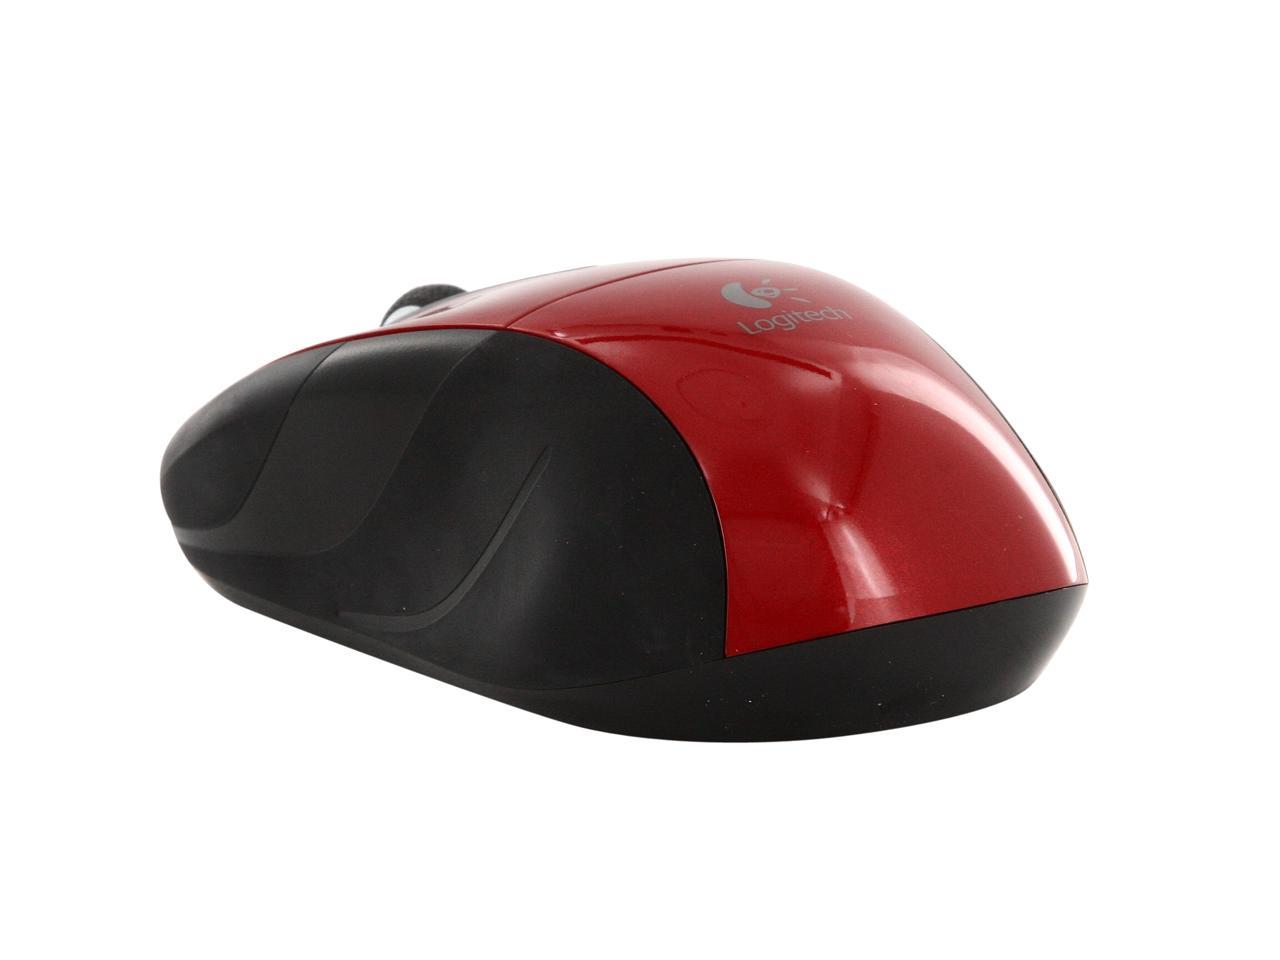 Match Gedehams Diskret Logitech Wireless Mouse M525 - Red / Black - Newegg.com